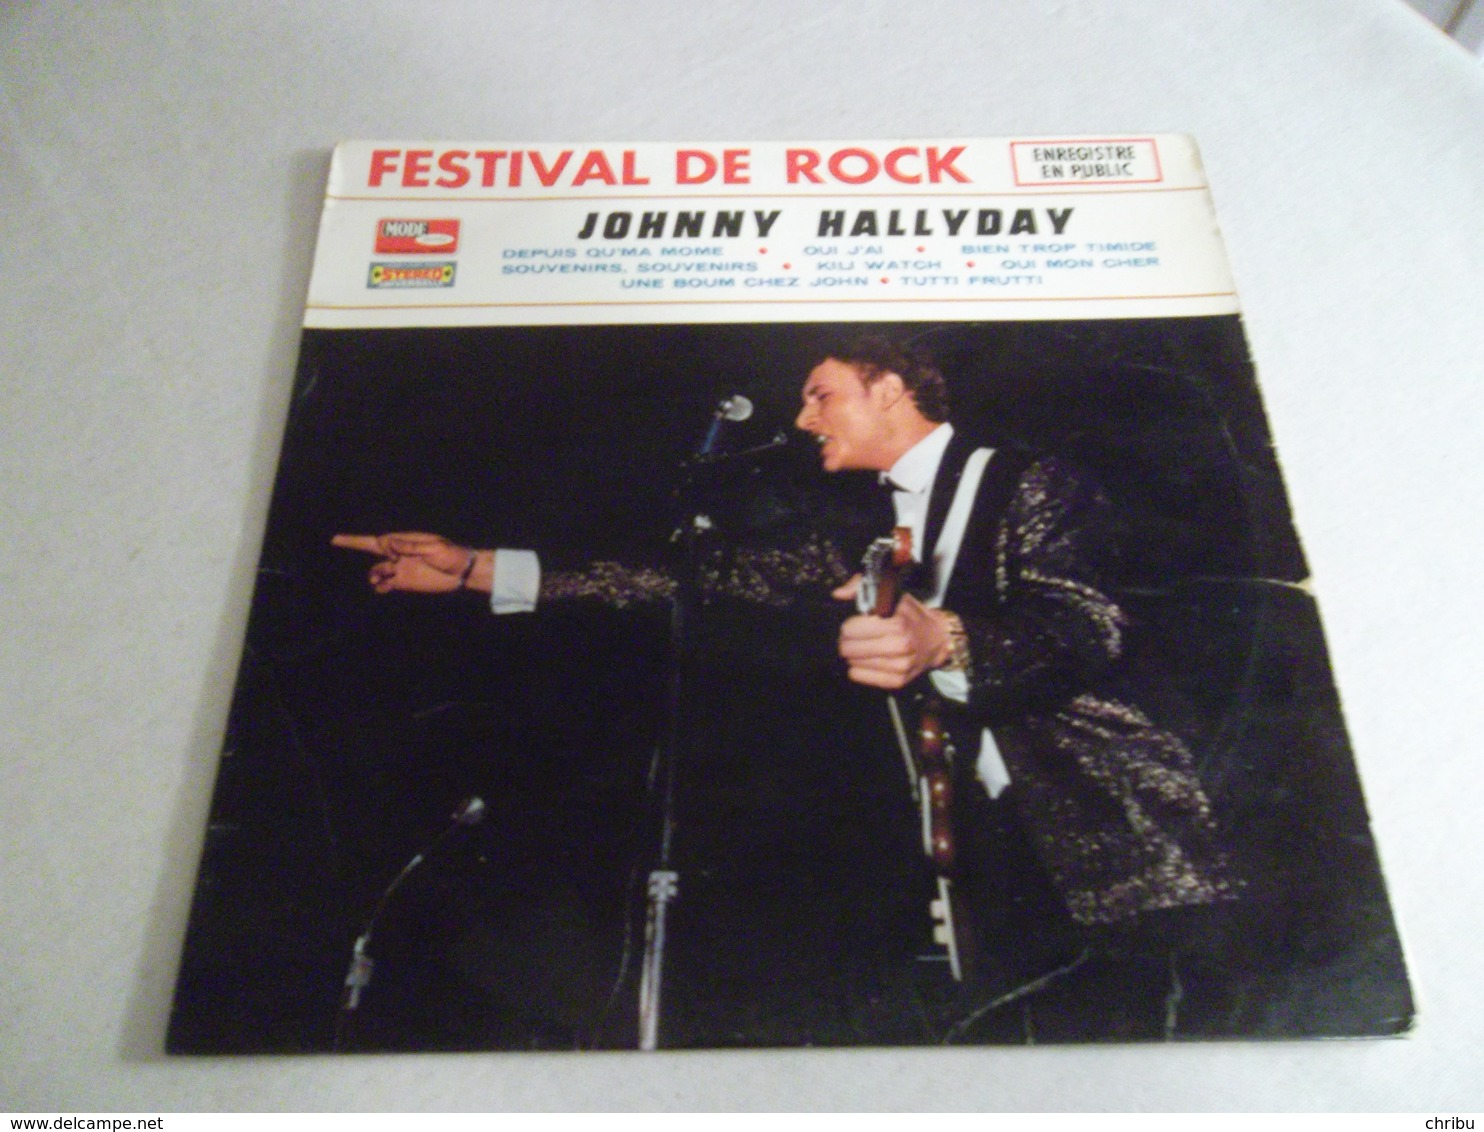 VINYLE 33 T FESTIVAL DE ROCK JOHNNY HALLYDAY ENREGISTRE EN PUBLIC  CMDINT 9662 - Rock